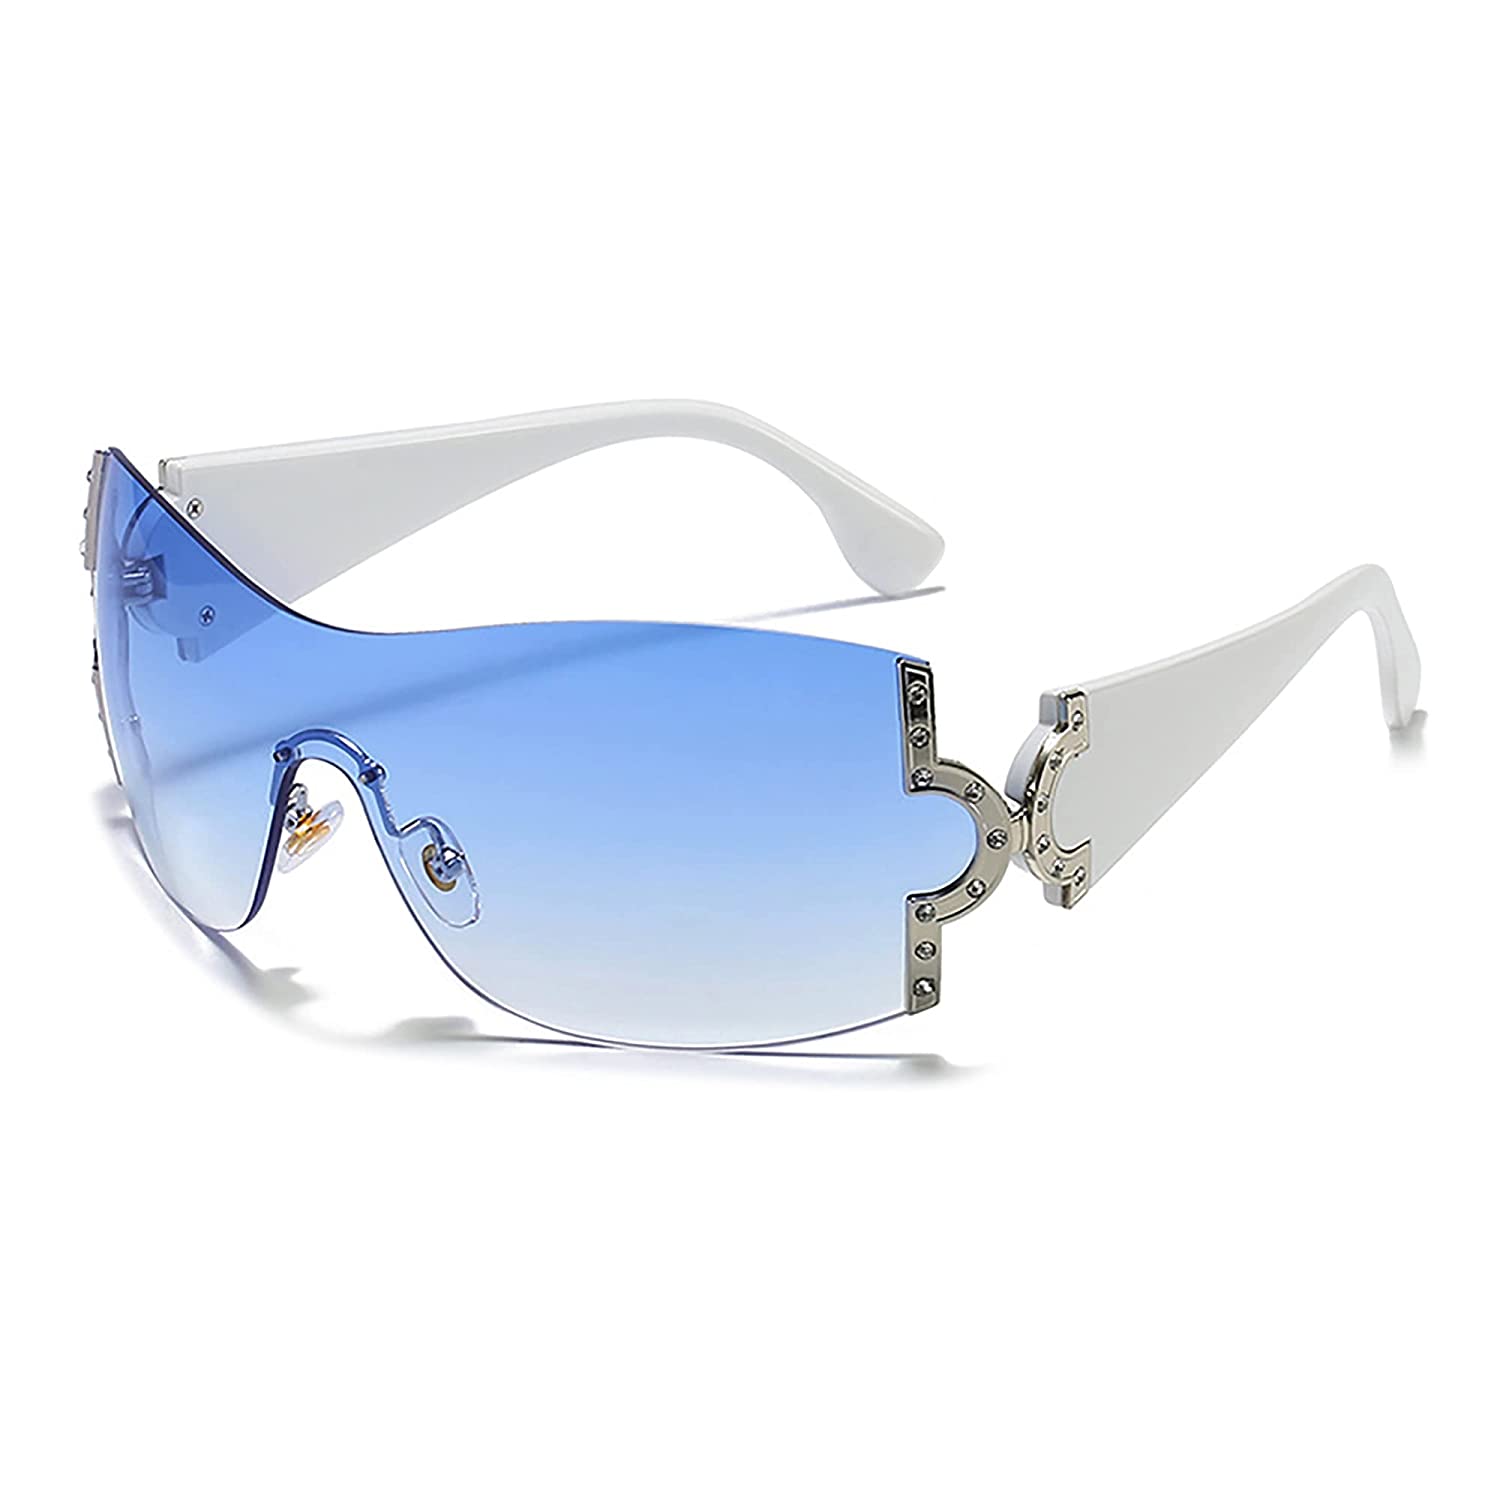 Buy Prada Fashion women's Sunglasses PR-20ZS-1425S0 - Ashford.com